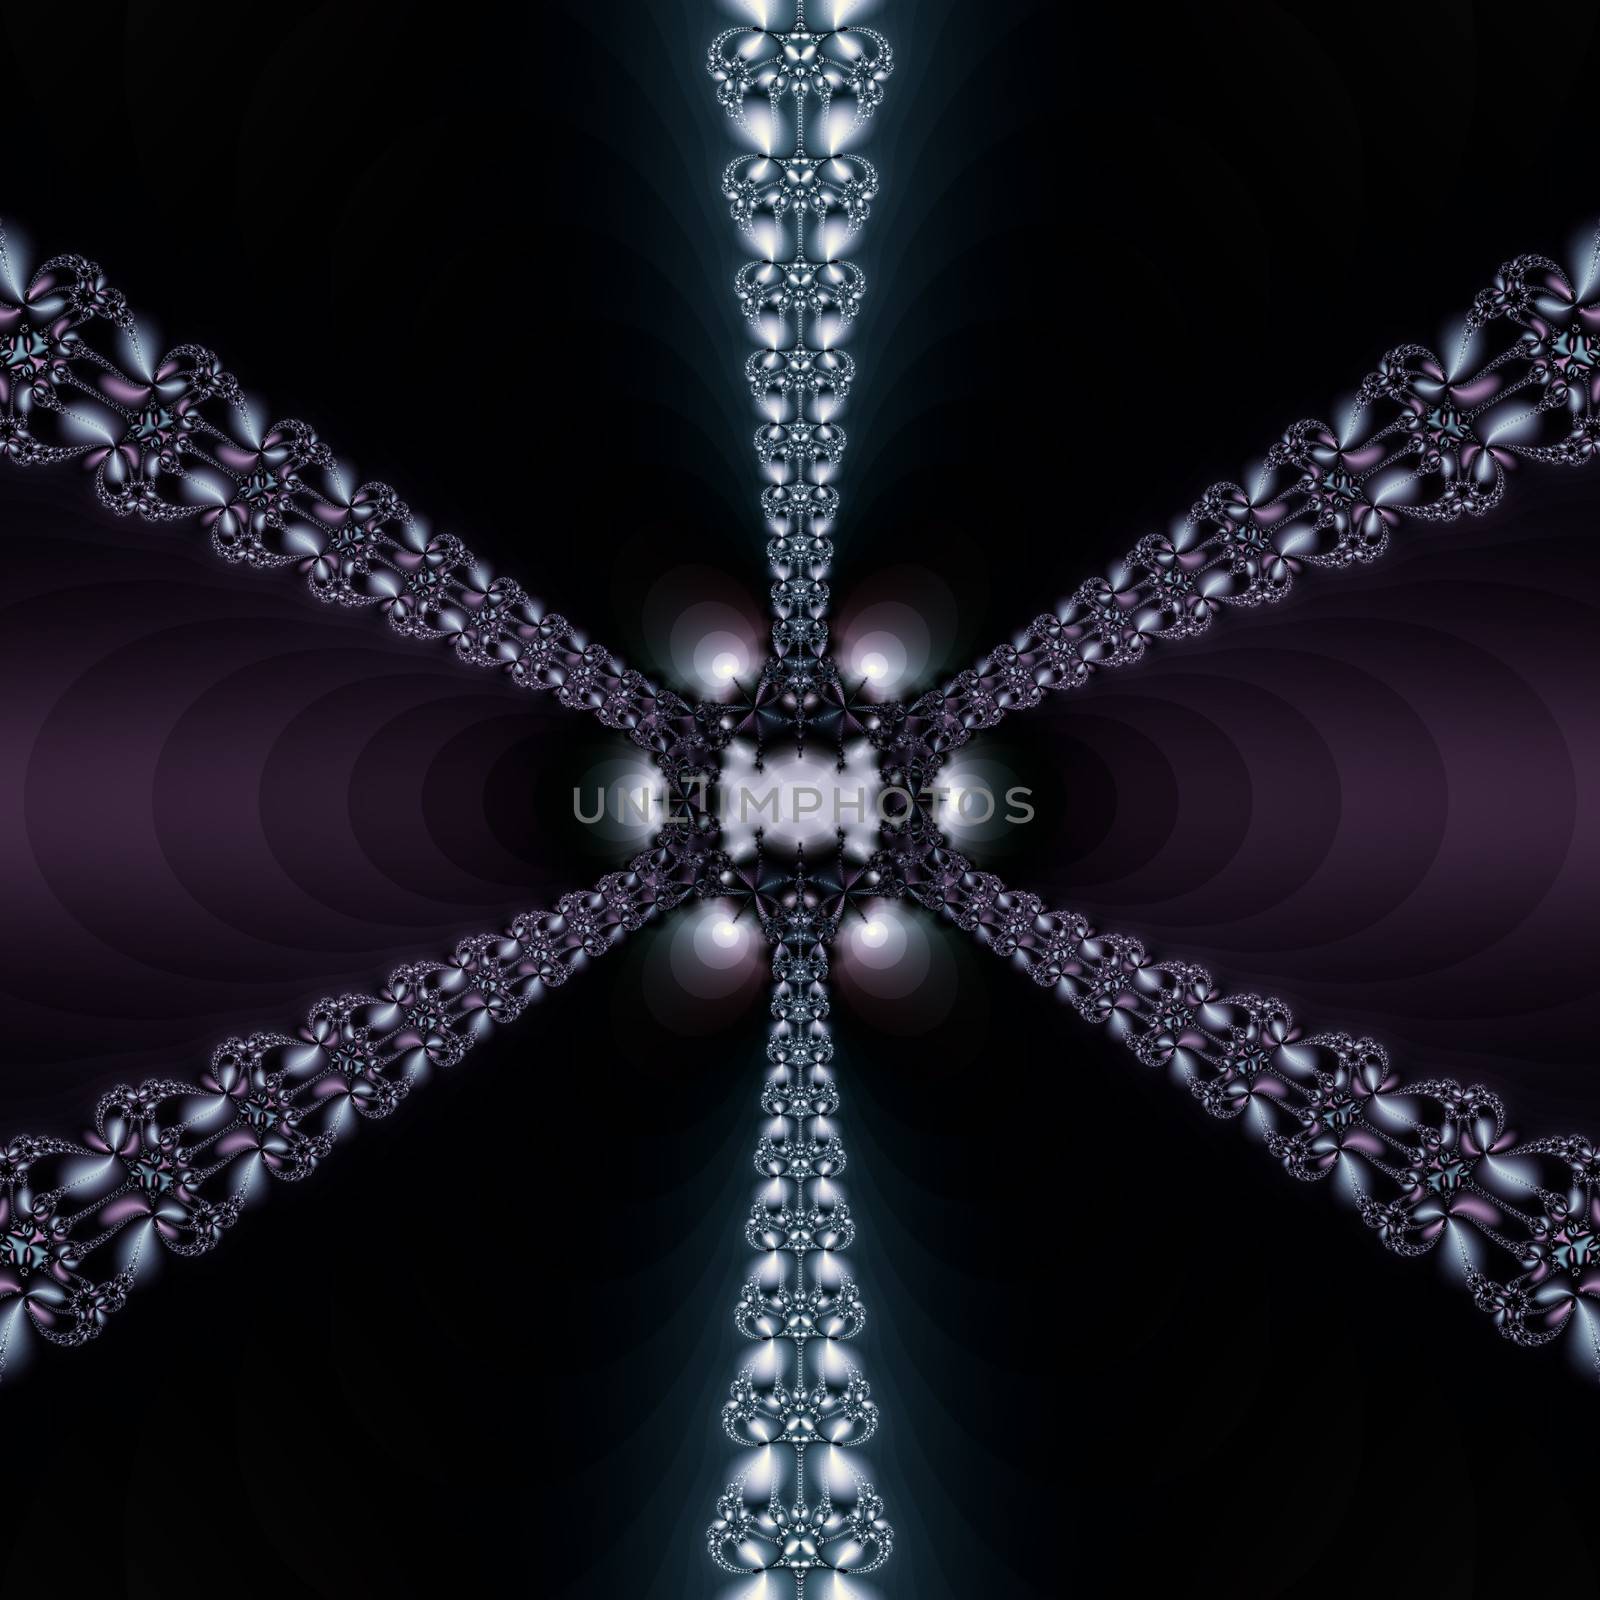 Elegant fractal design, abstract psychedelic art, magic star